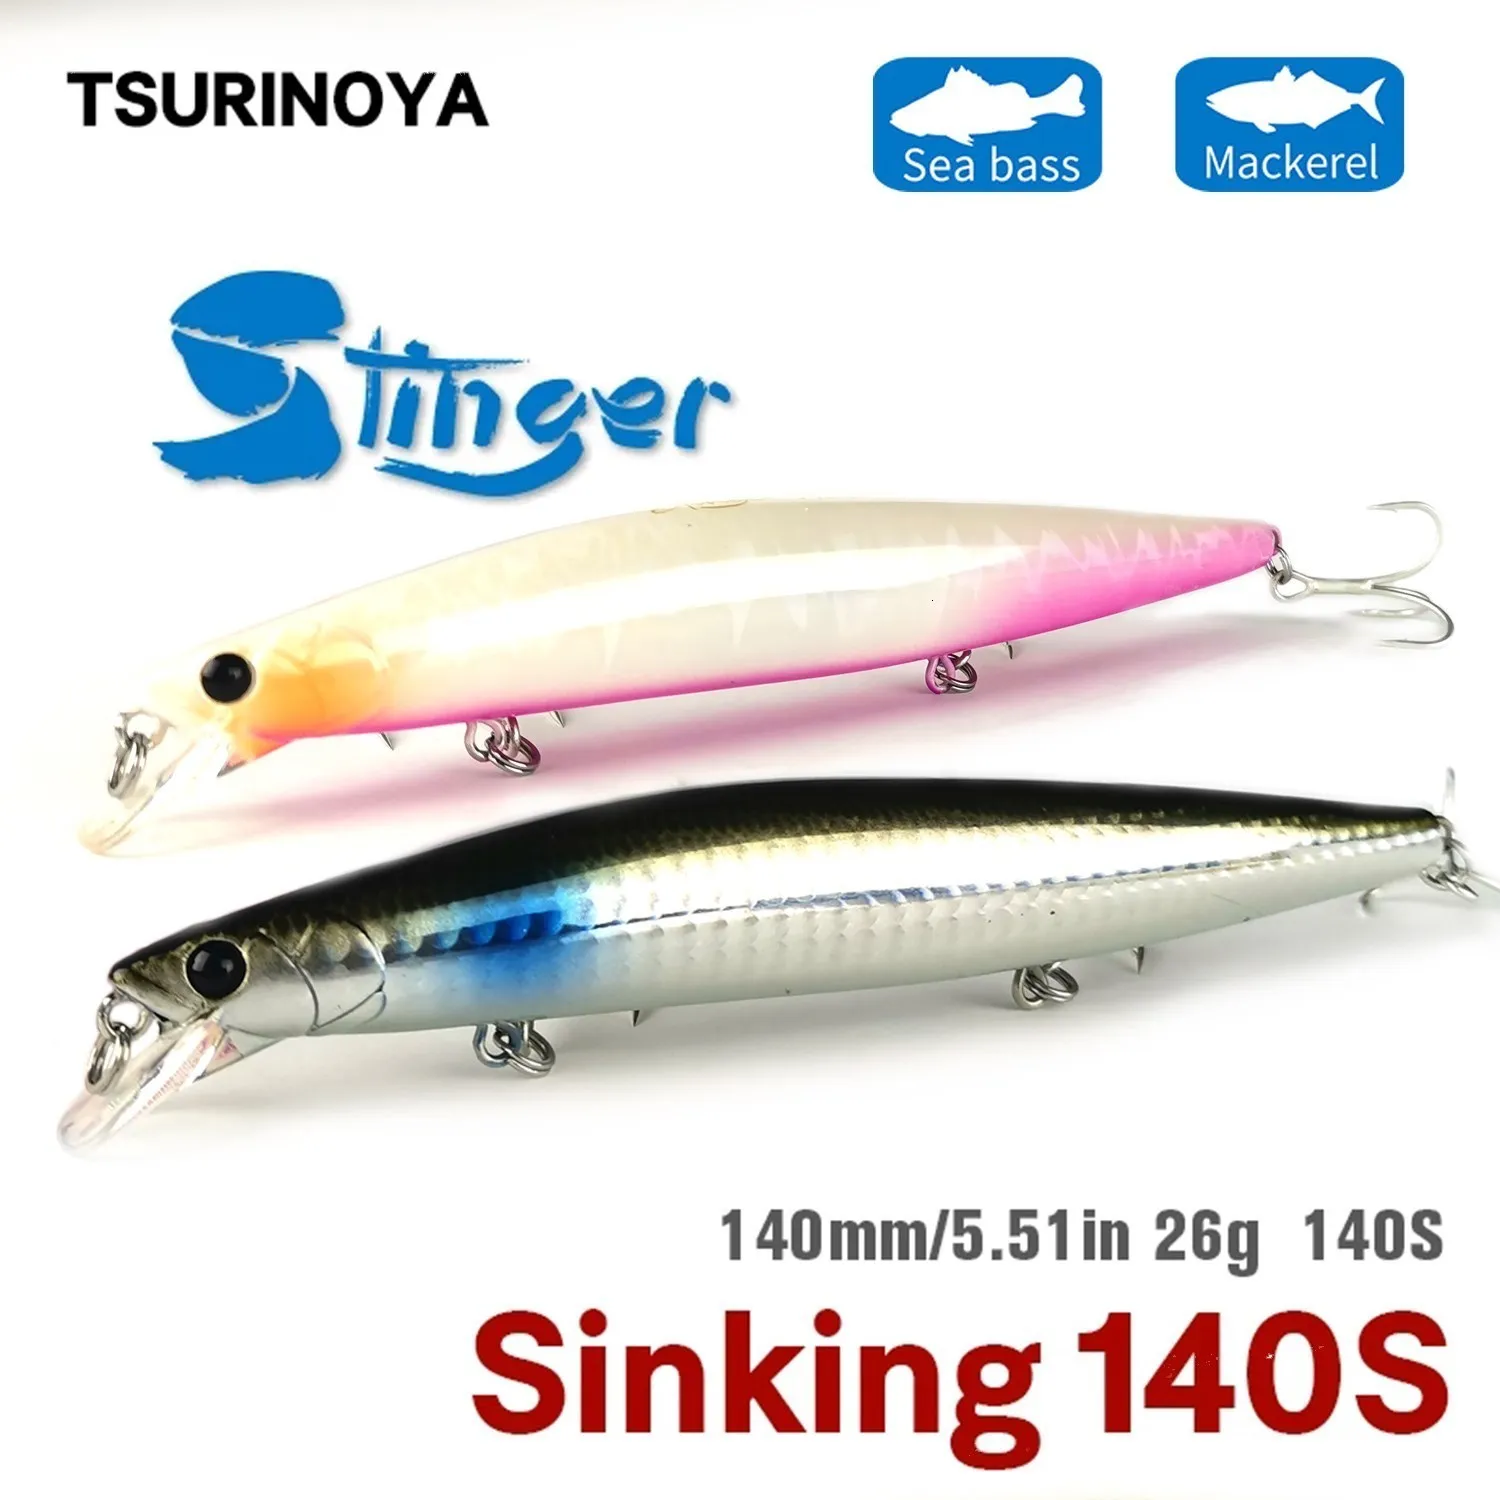 Fishing Accessories TSURINOYA 26g 140mm Sinking Minnow DW92 140S Saltwater Long Casting Hard Baits Tungsten Weight Sea Bass Pike Lure 230629